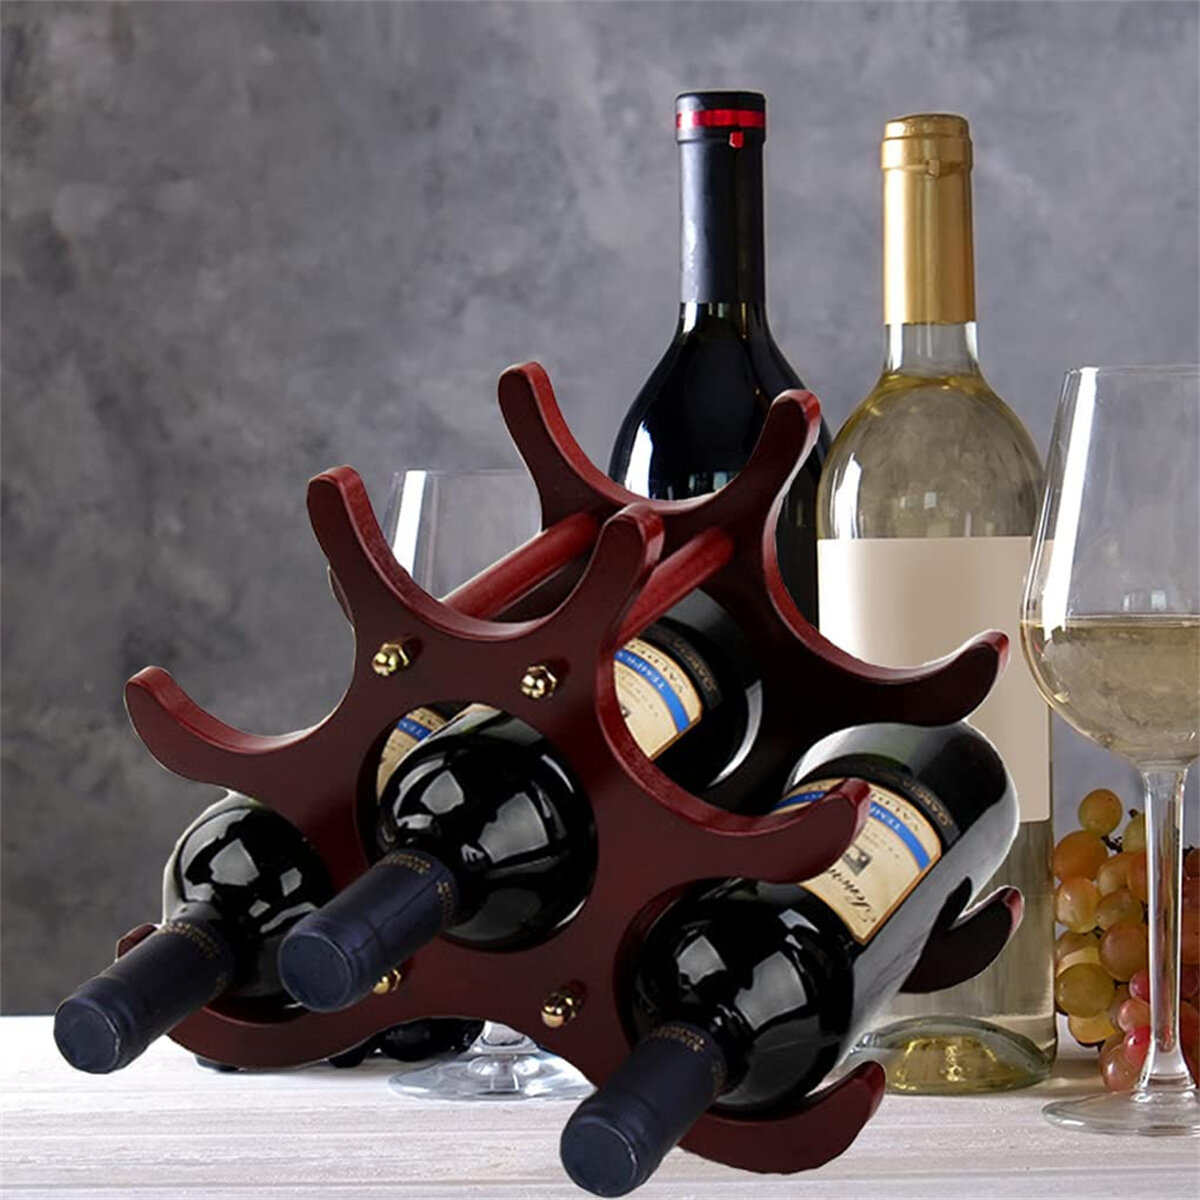 Godinger Wine Rack Metal Countertop Stand for Wine Bottles 6 Wine Bottle Storage Holder